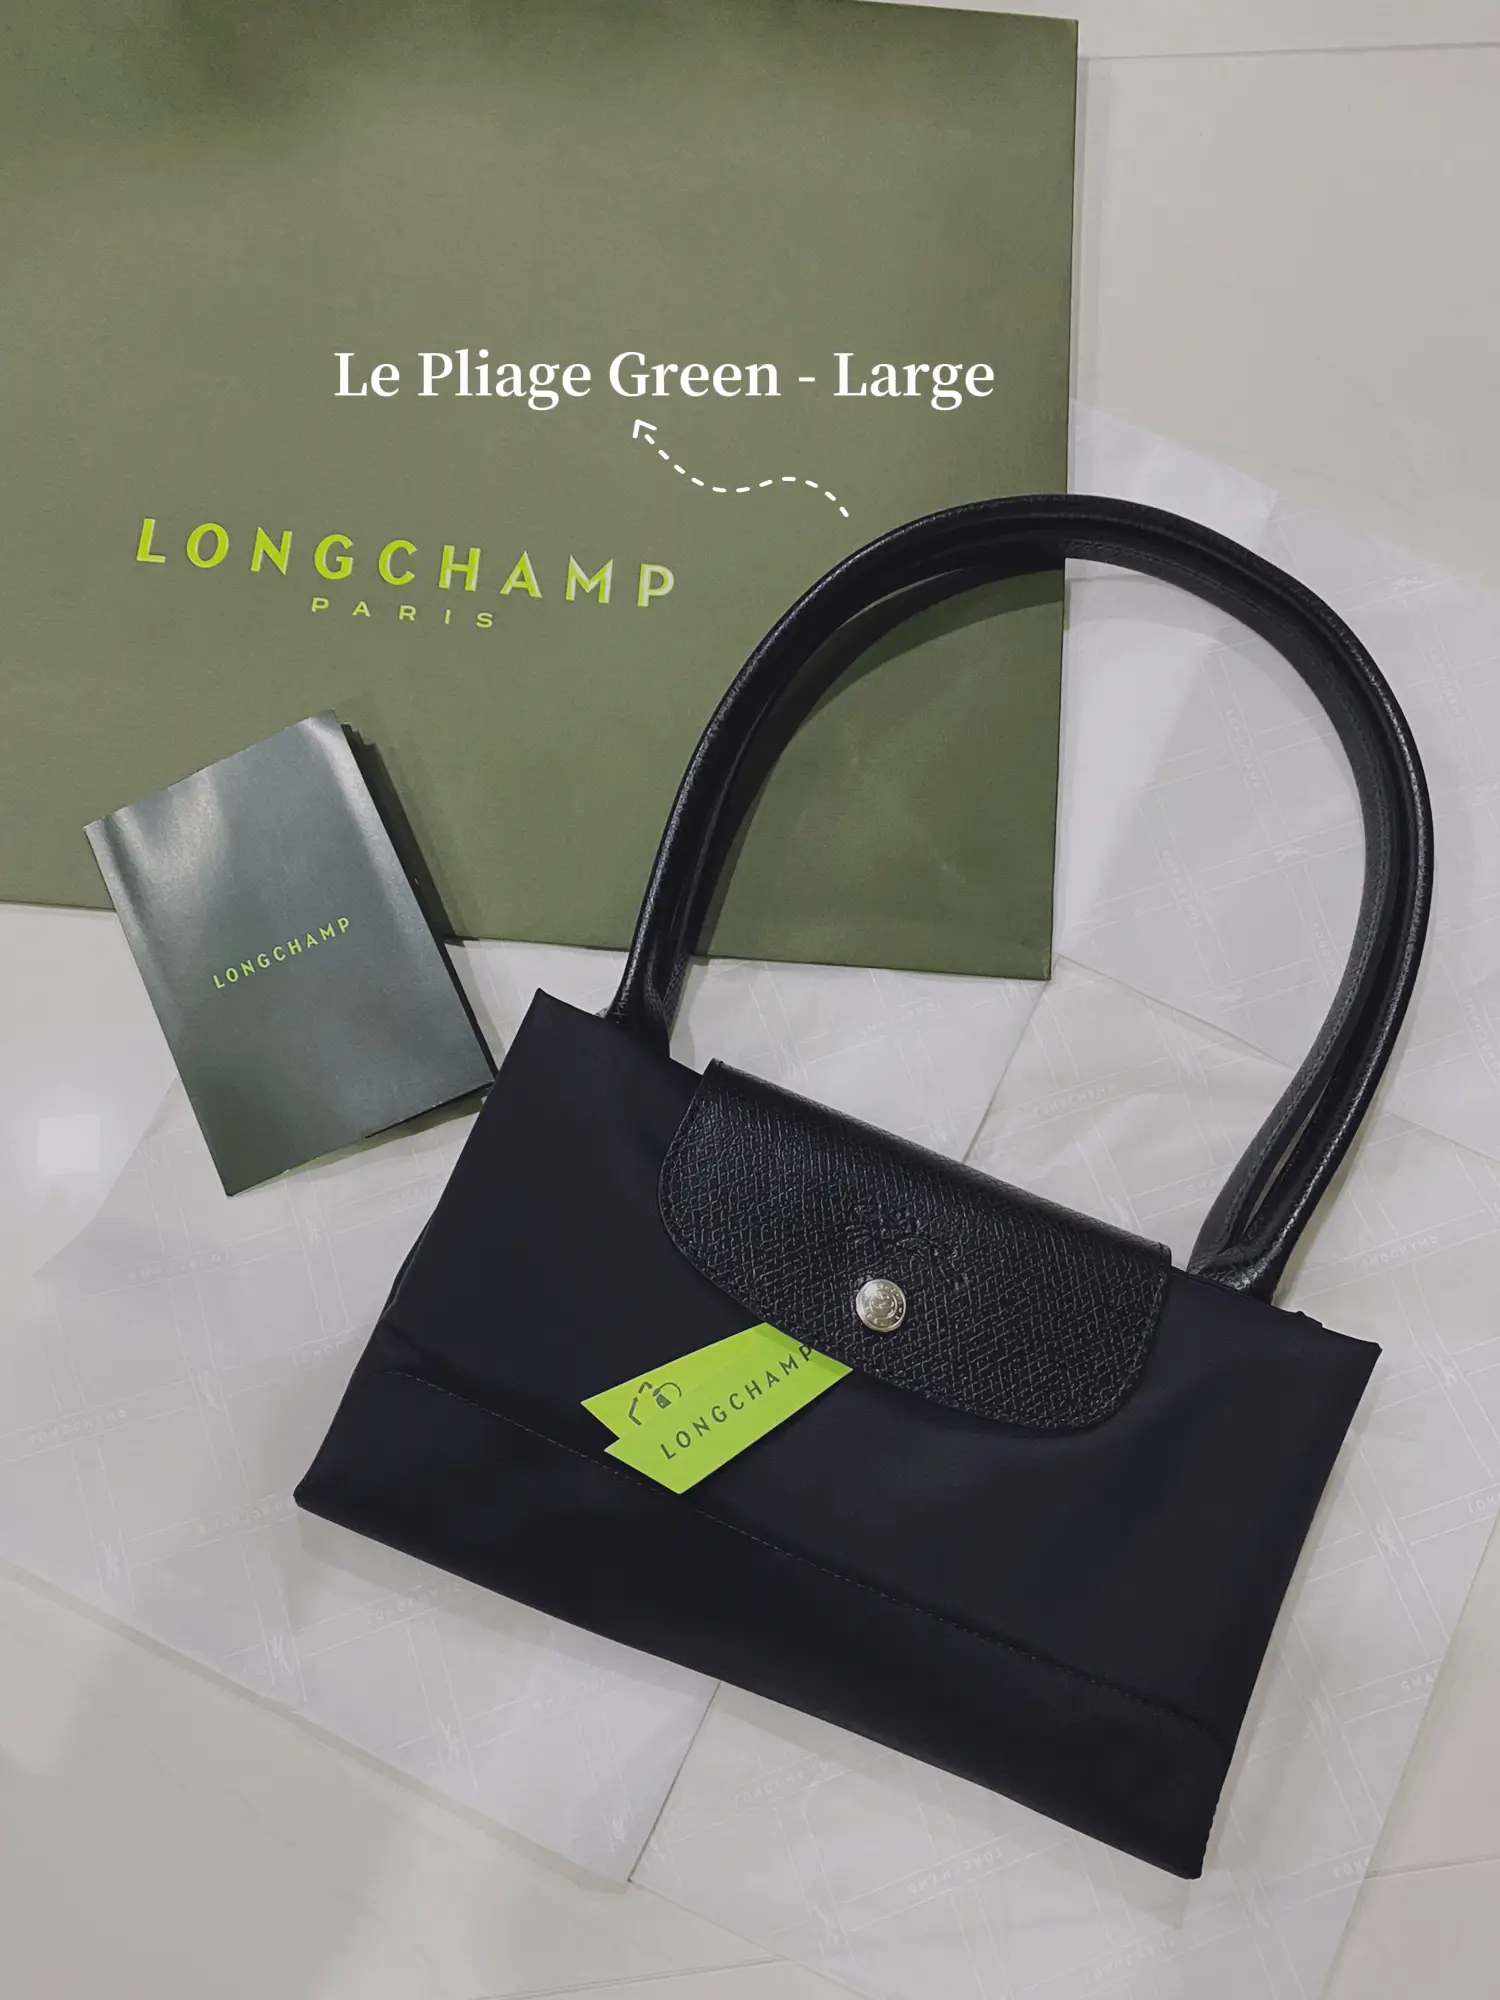 longchamp size comparison - Lemon8 Search